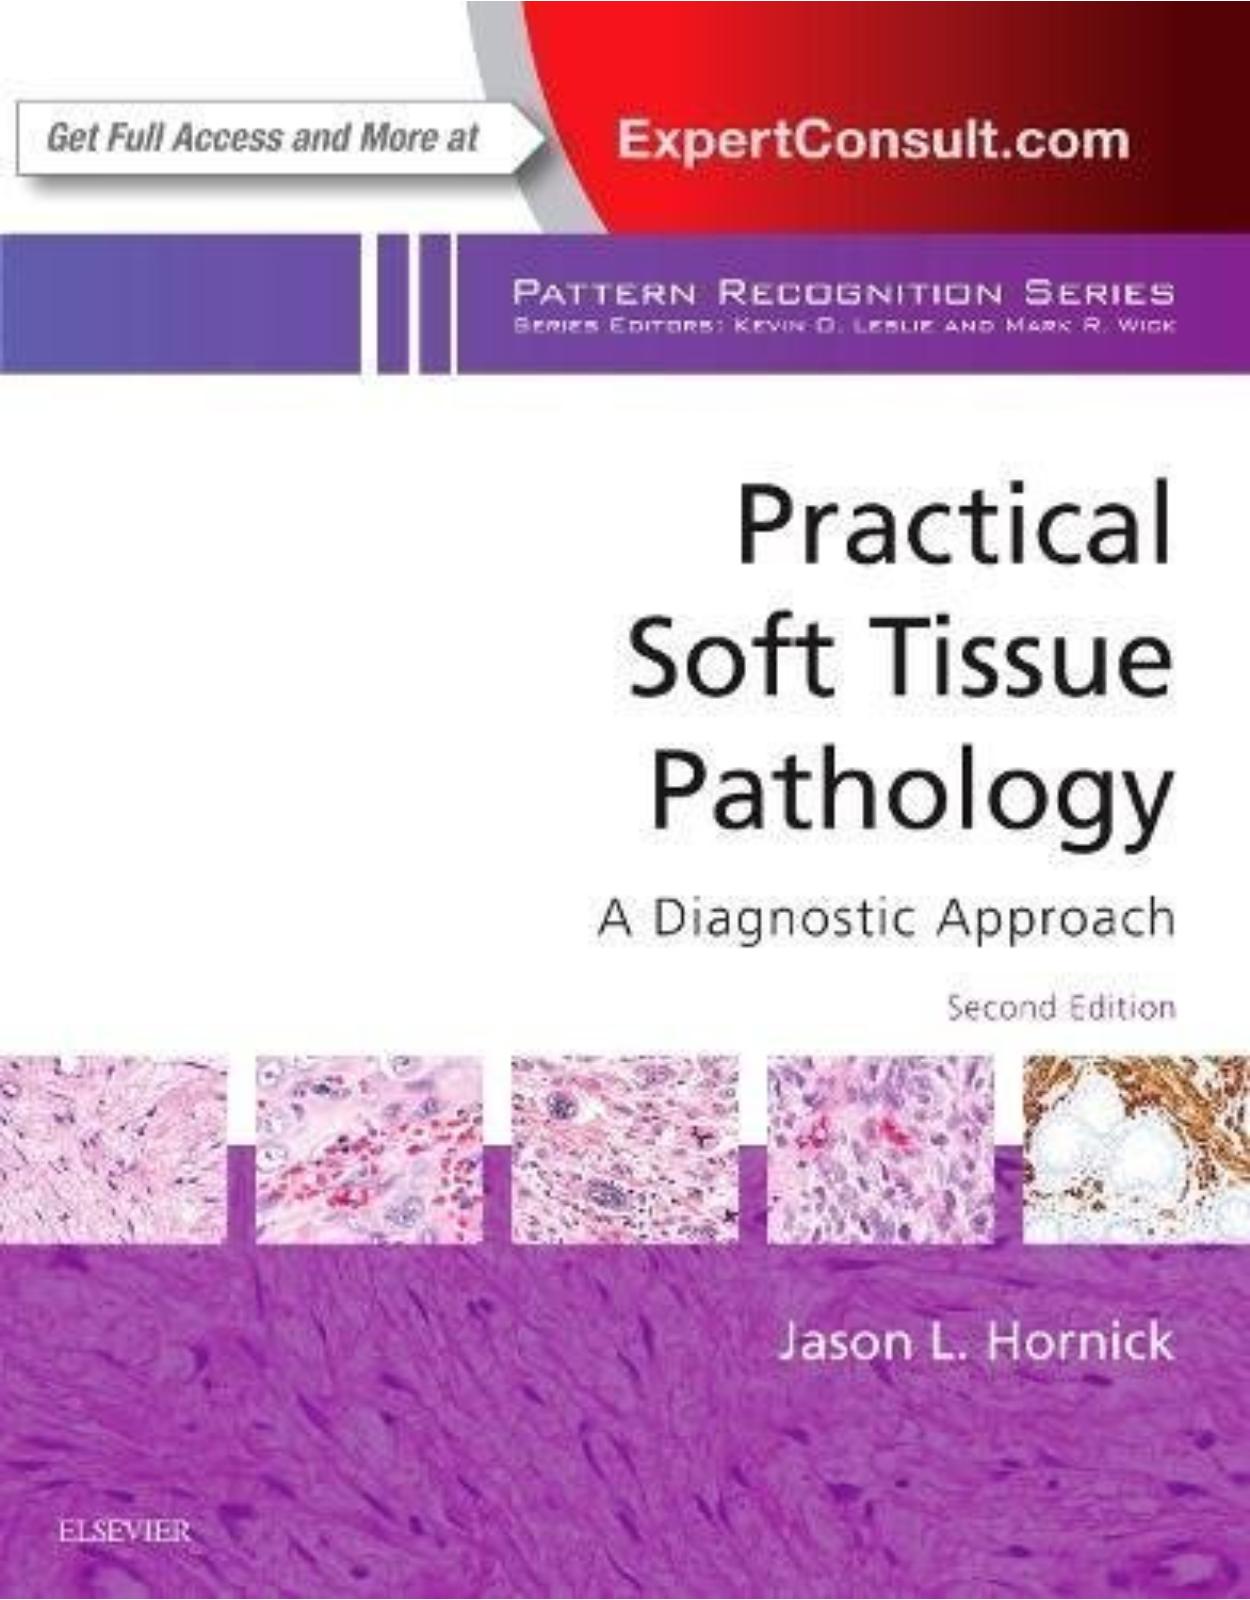 Practical Soft Tissue Pathology: A Diagnostic Approach, 2nd Edition 